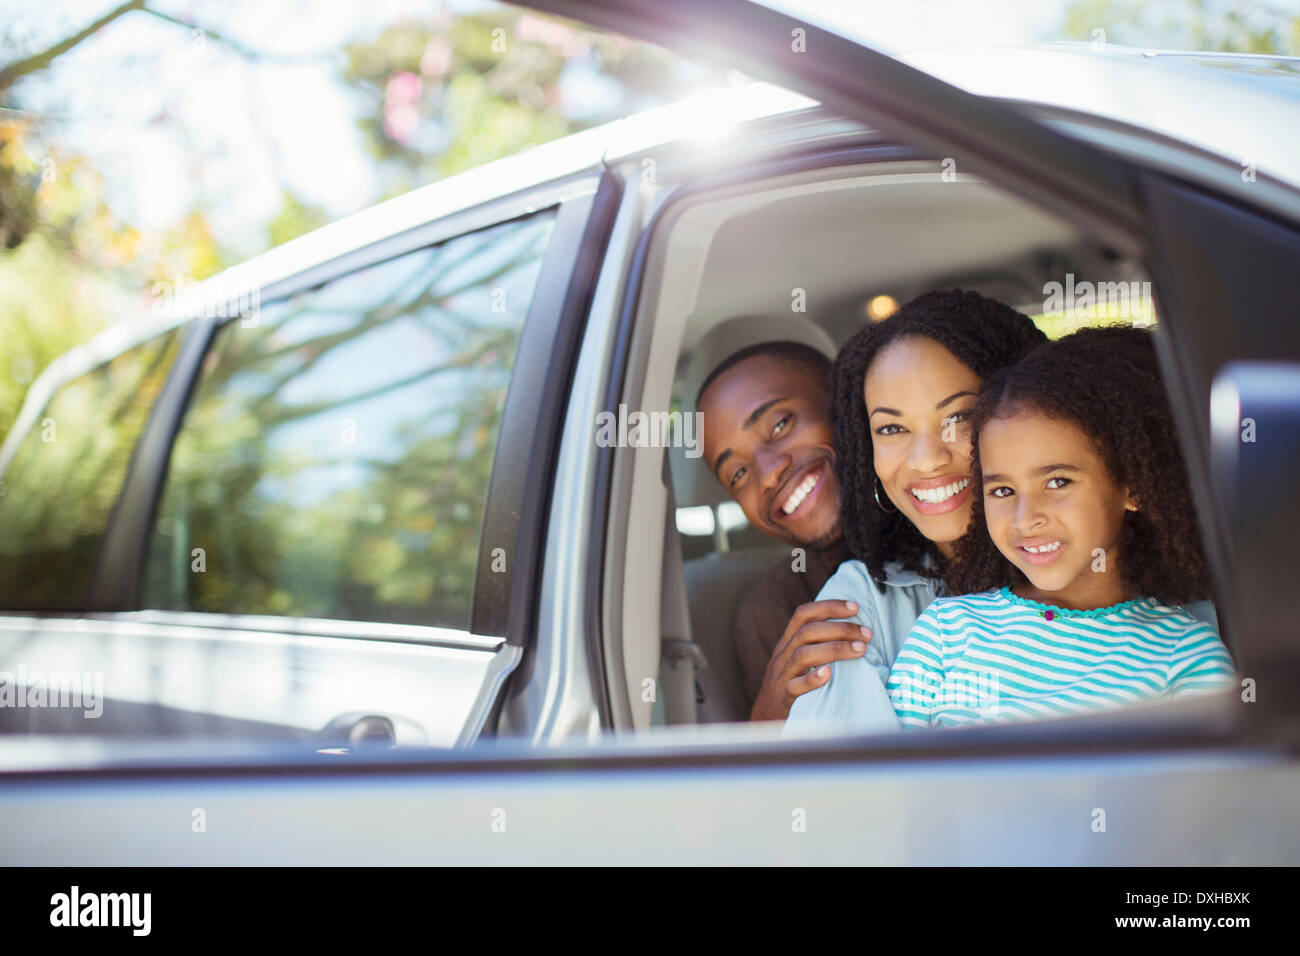 Portrait of happy family inside car Stock Photo